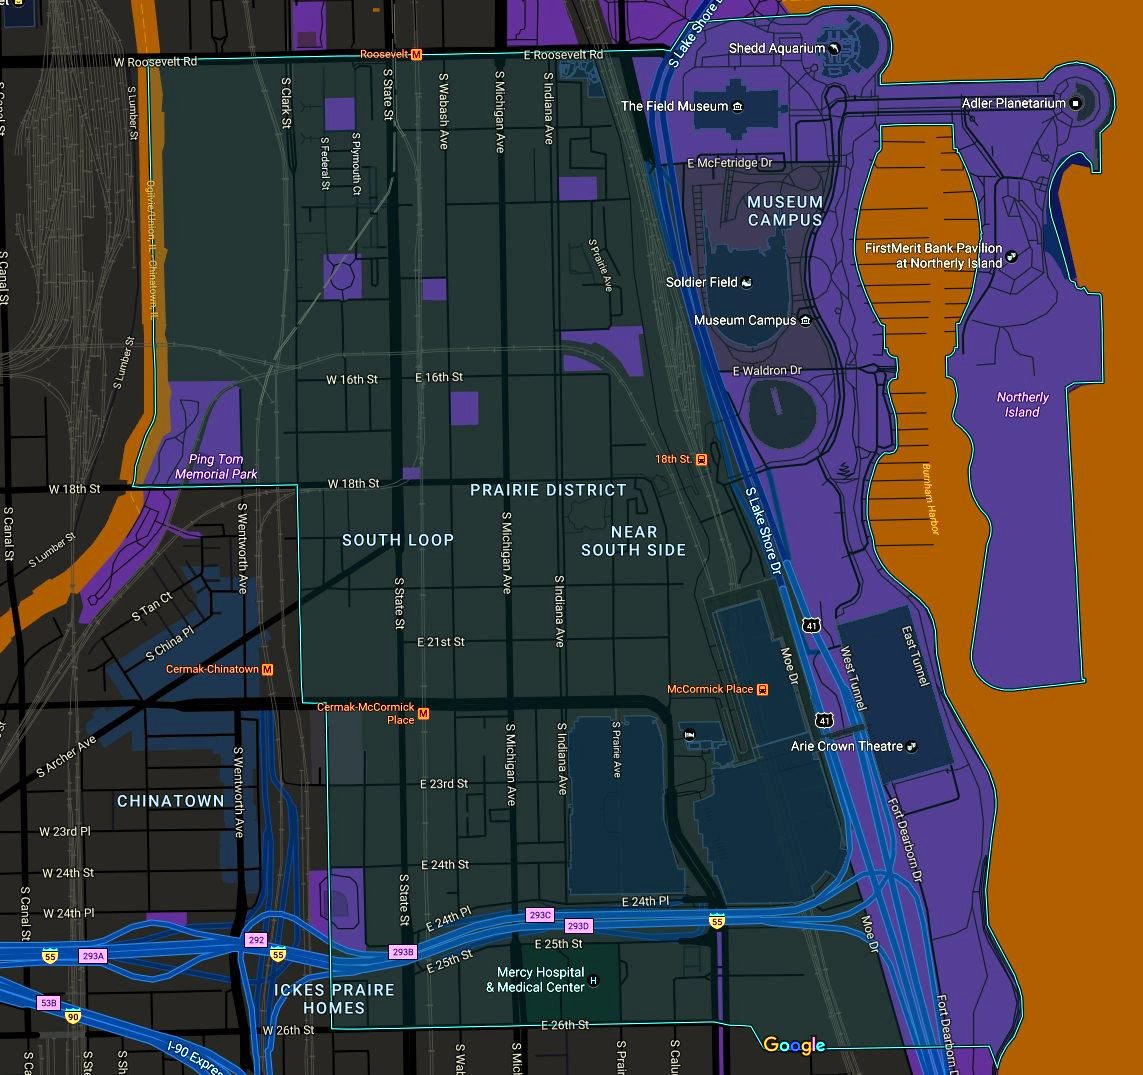 Chicago Near South Side map.jpg